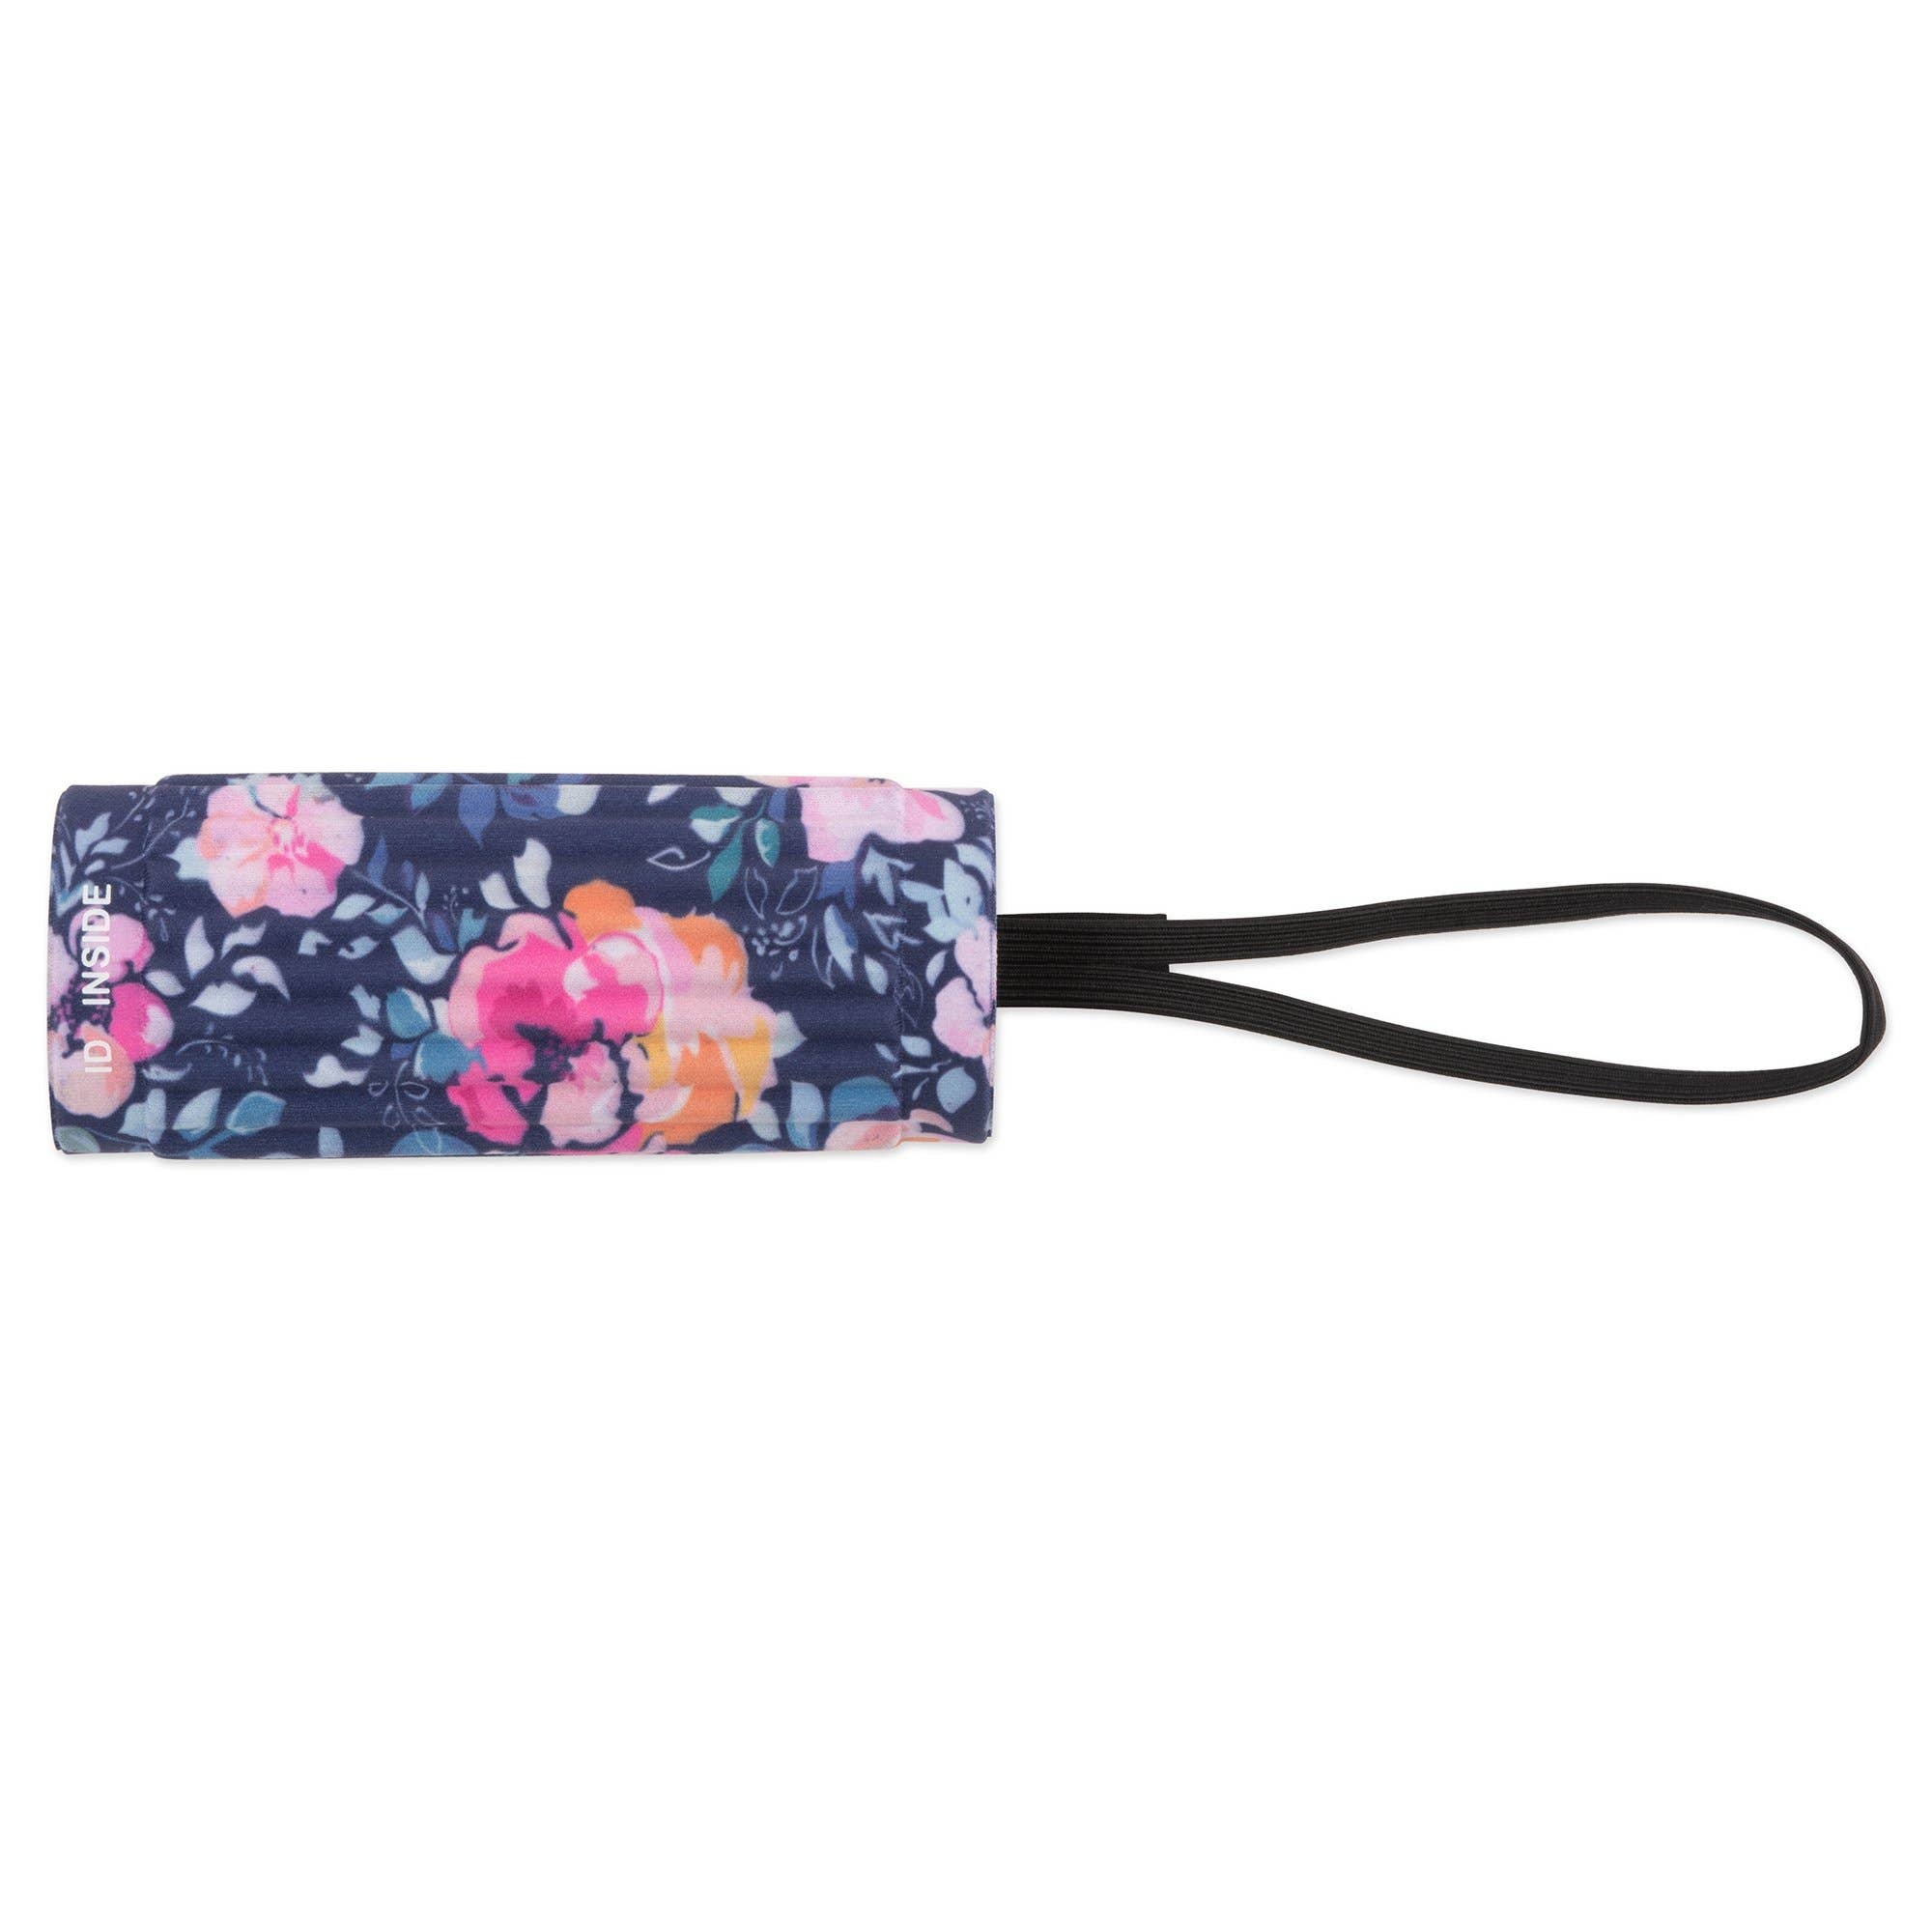 Bucky - IdentiGrip Luggage Handle Wrap - Midnight Floral